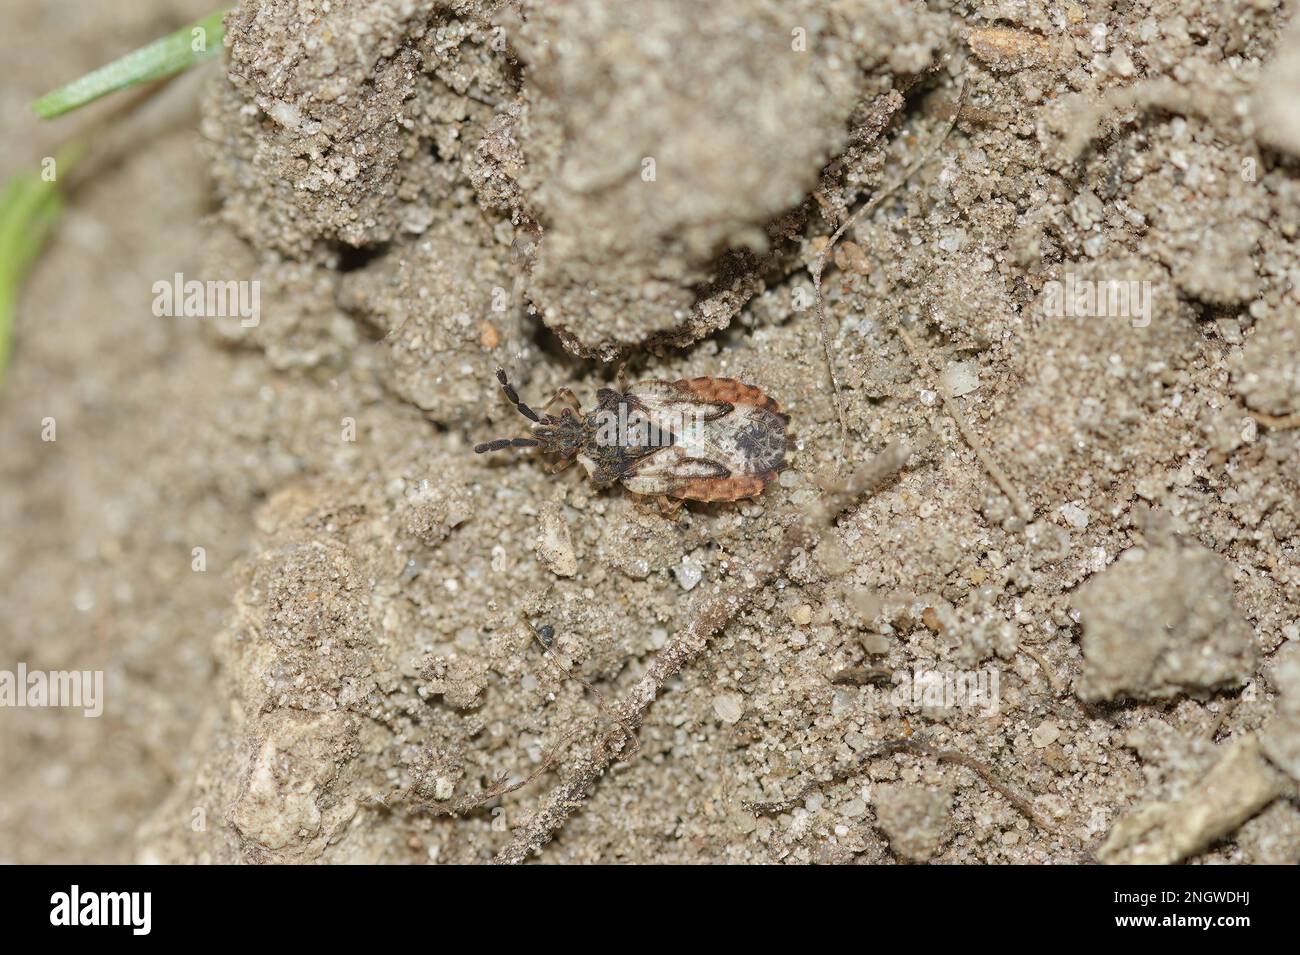 Detailed closeup on a small common flatbug, Aradus depressus on the soil Stock Photo